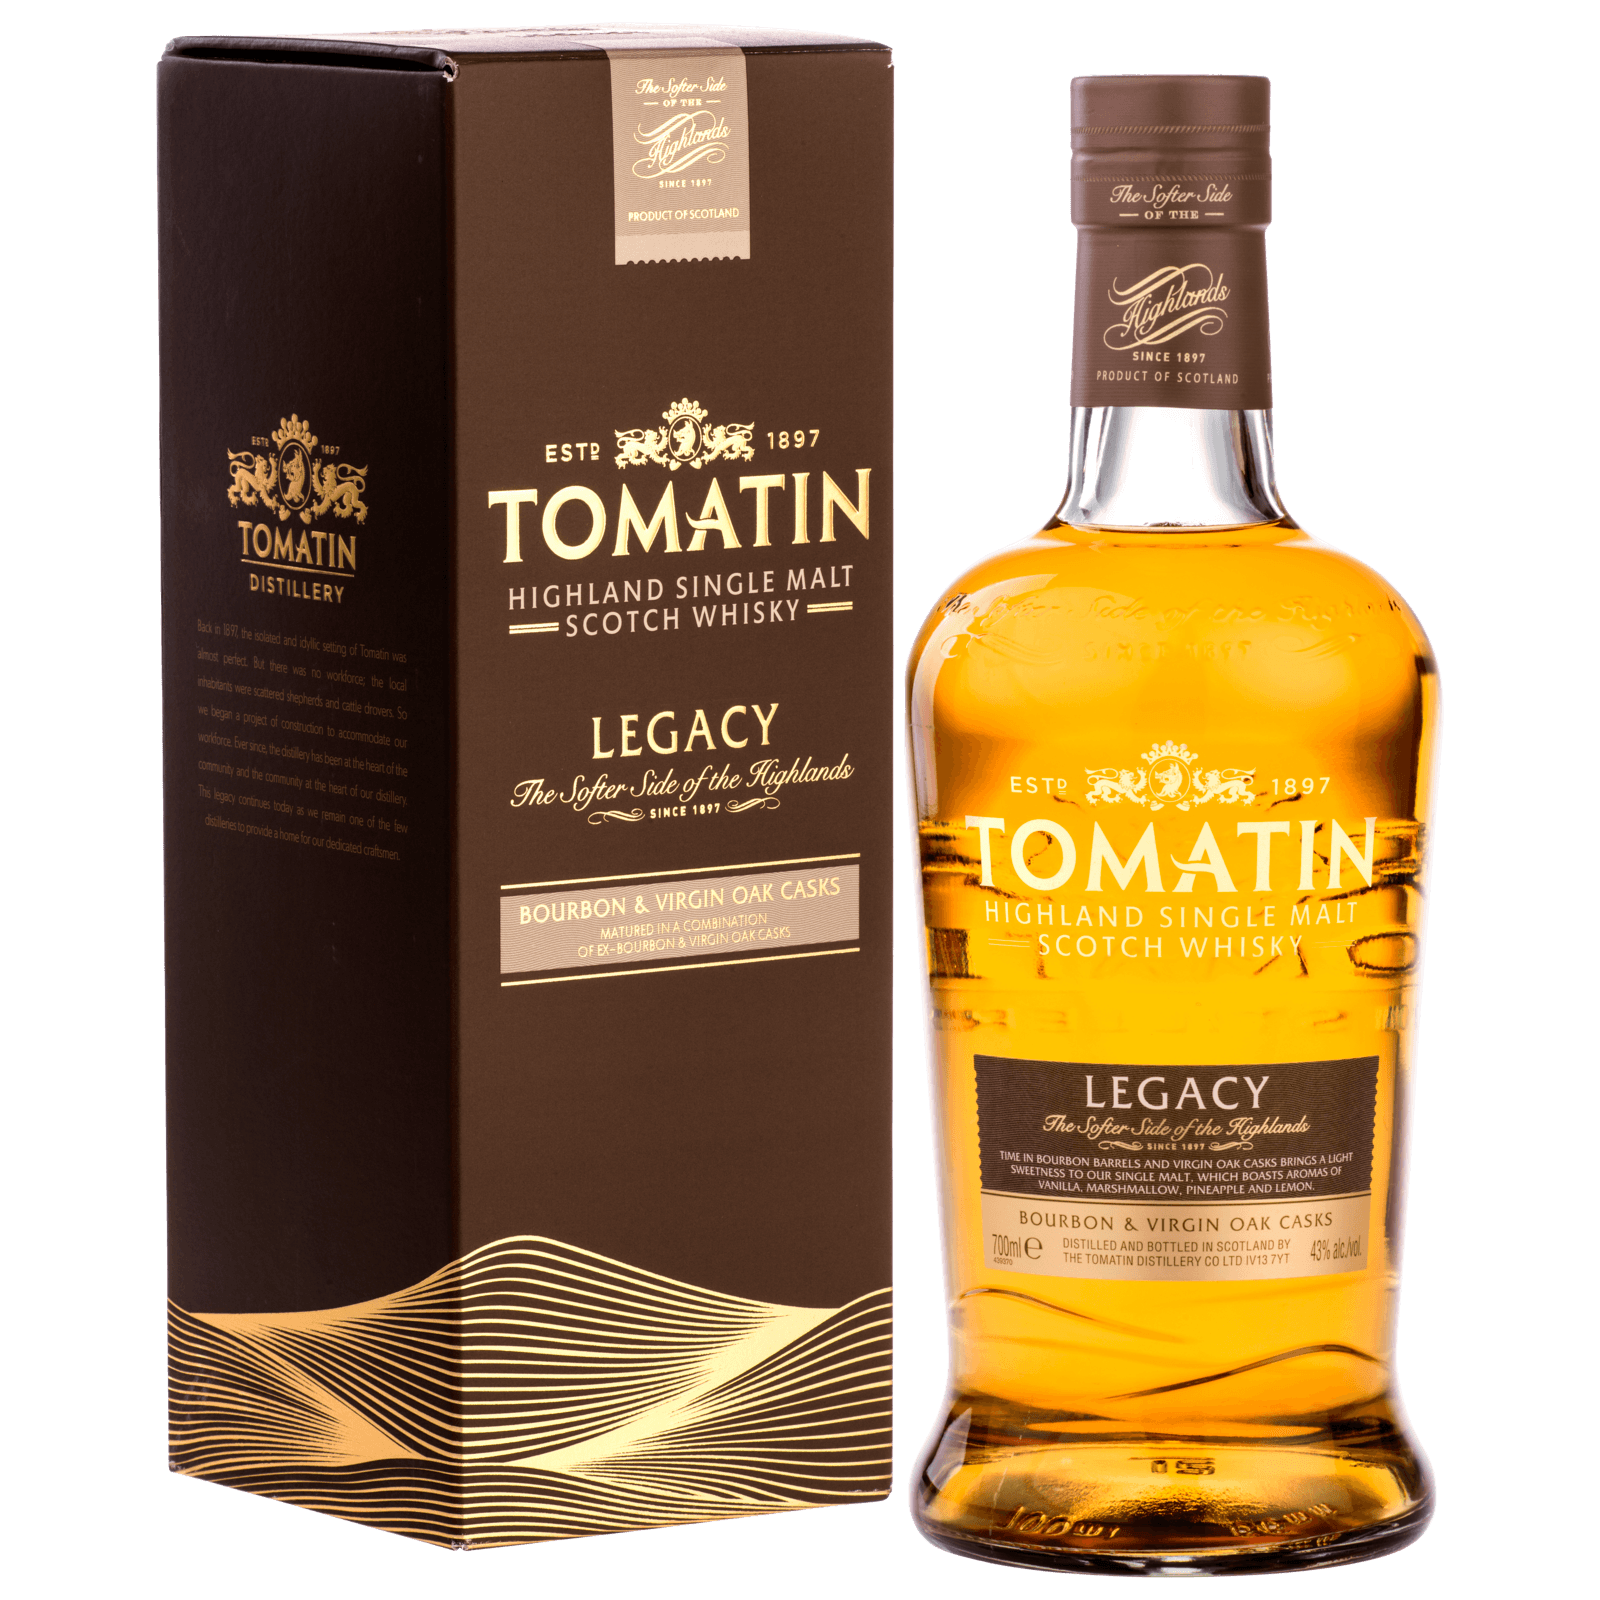 Tomatin Highland Single Malt Scotch Whisky Legacy 0,7l bei REWE online  bestellen!